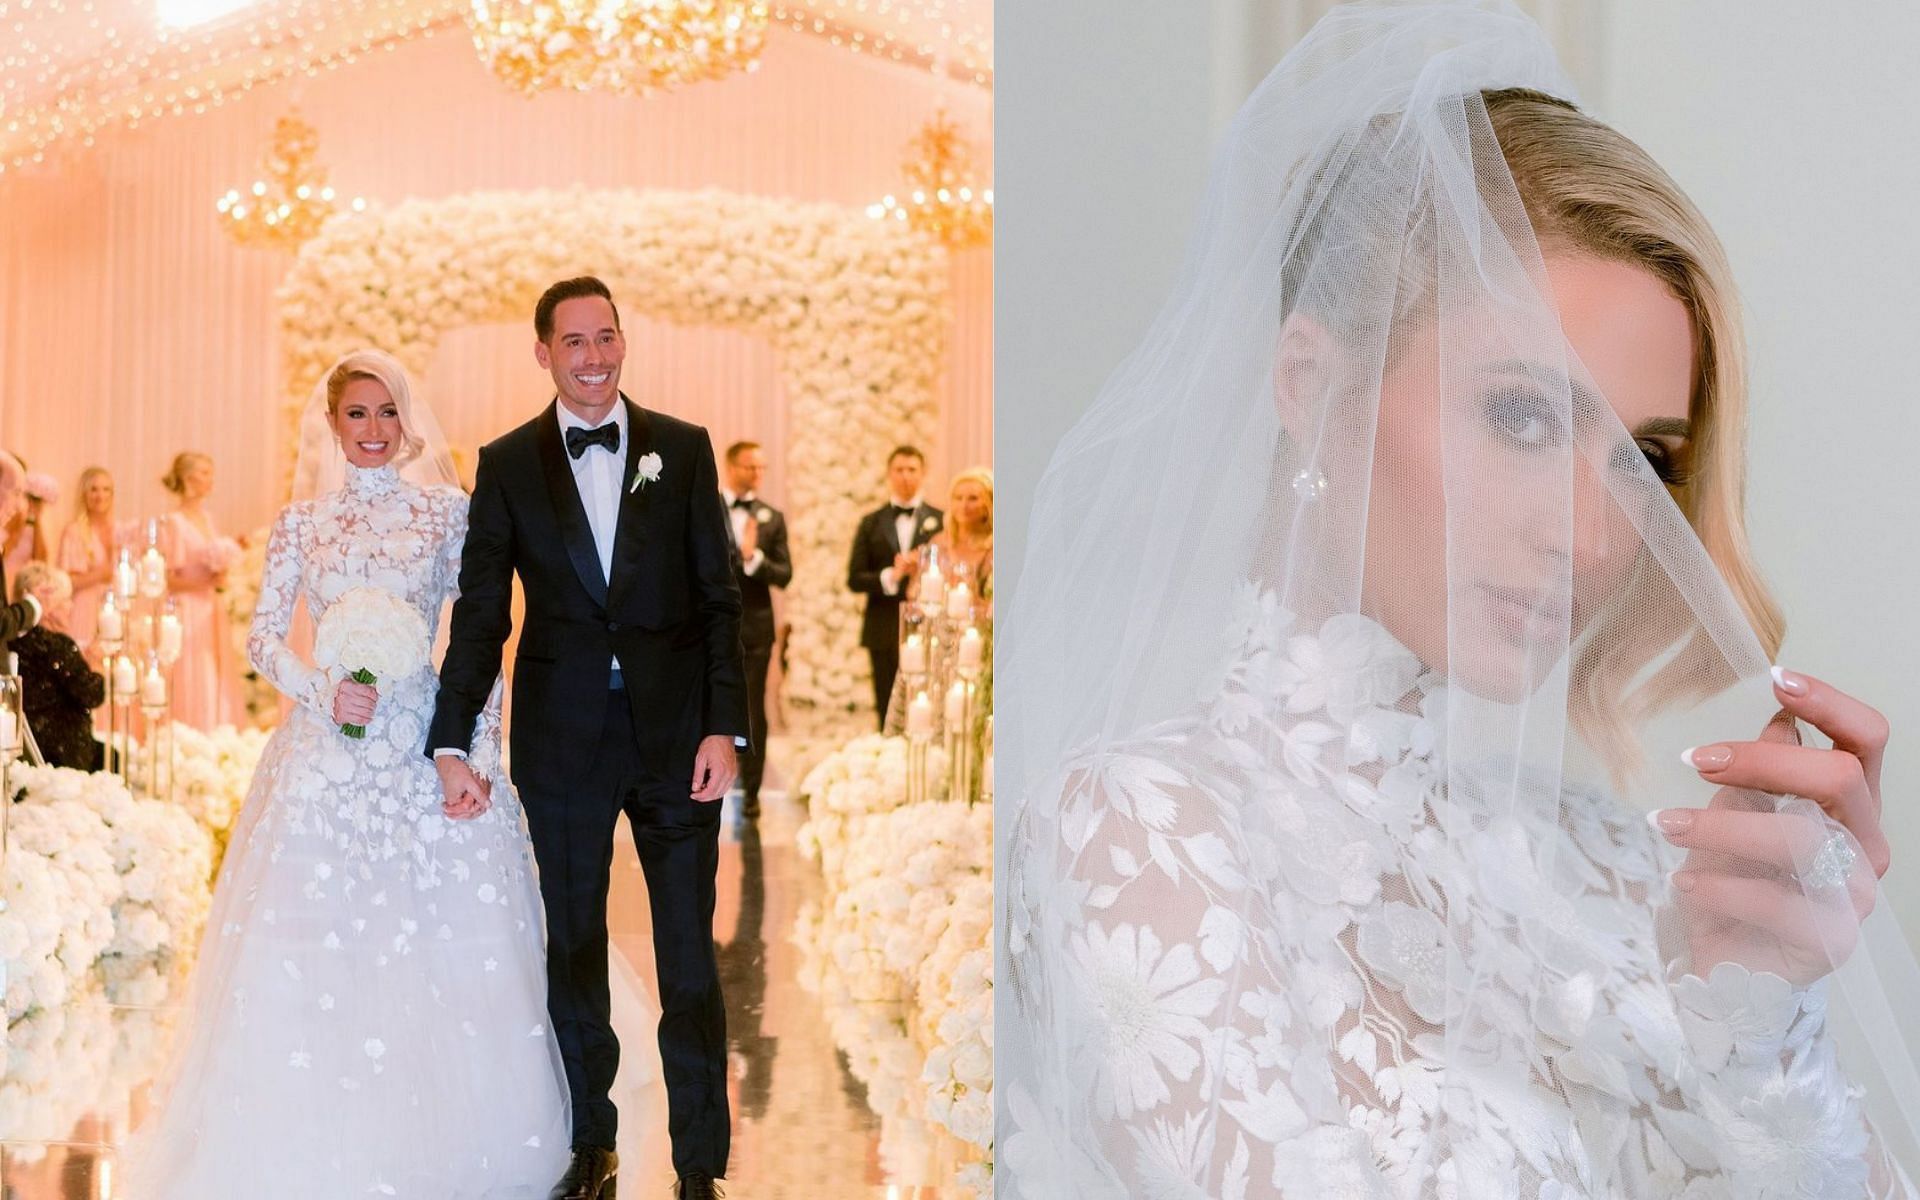 Paris Hilton, Gwen Stefani, more stars engaged, married in 2021